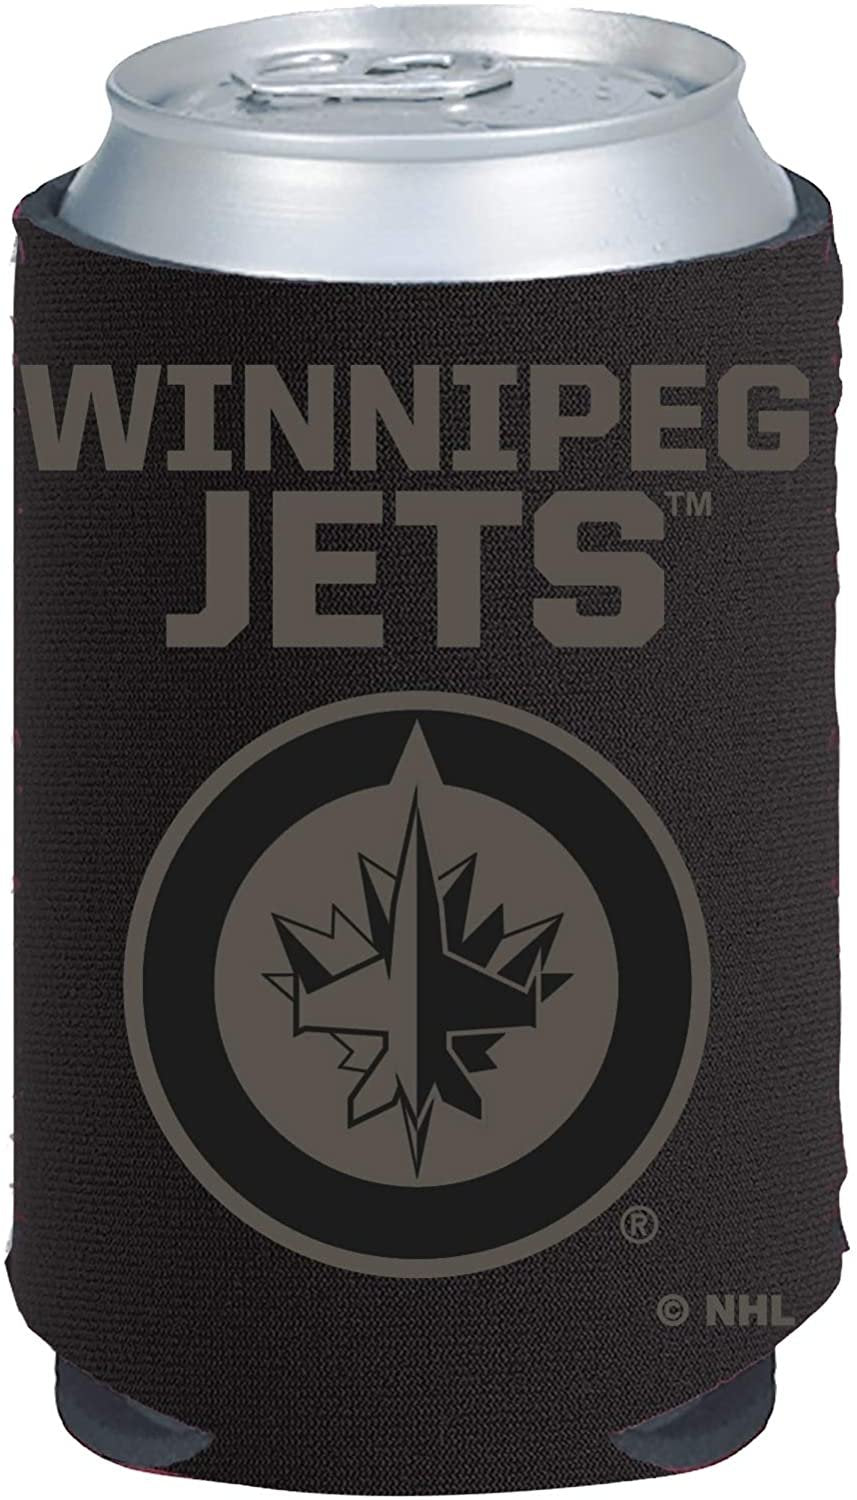 Winnipeg Jets Pair of 12oz Drink Can Cooler Insulated Neoprene Beverage Holder, Black Tonal Design